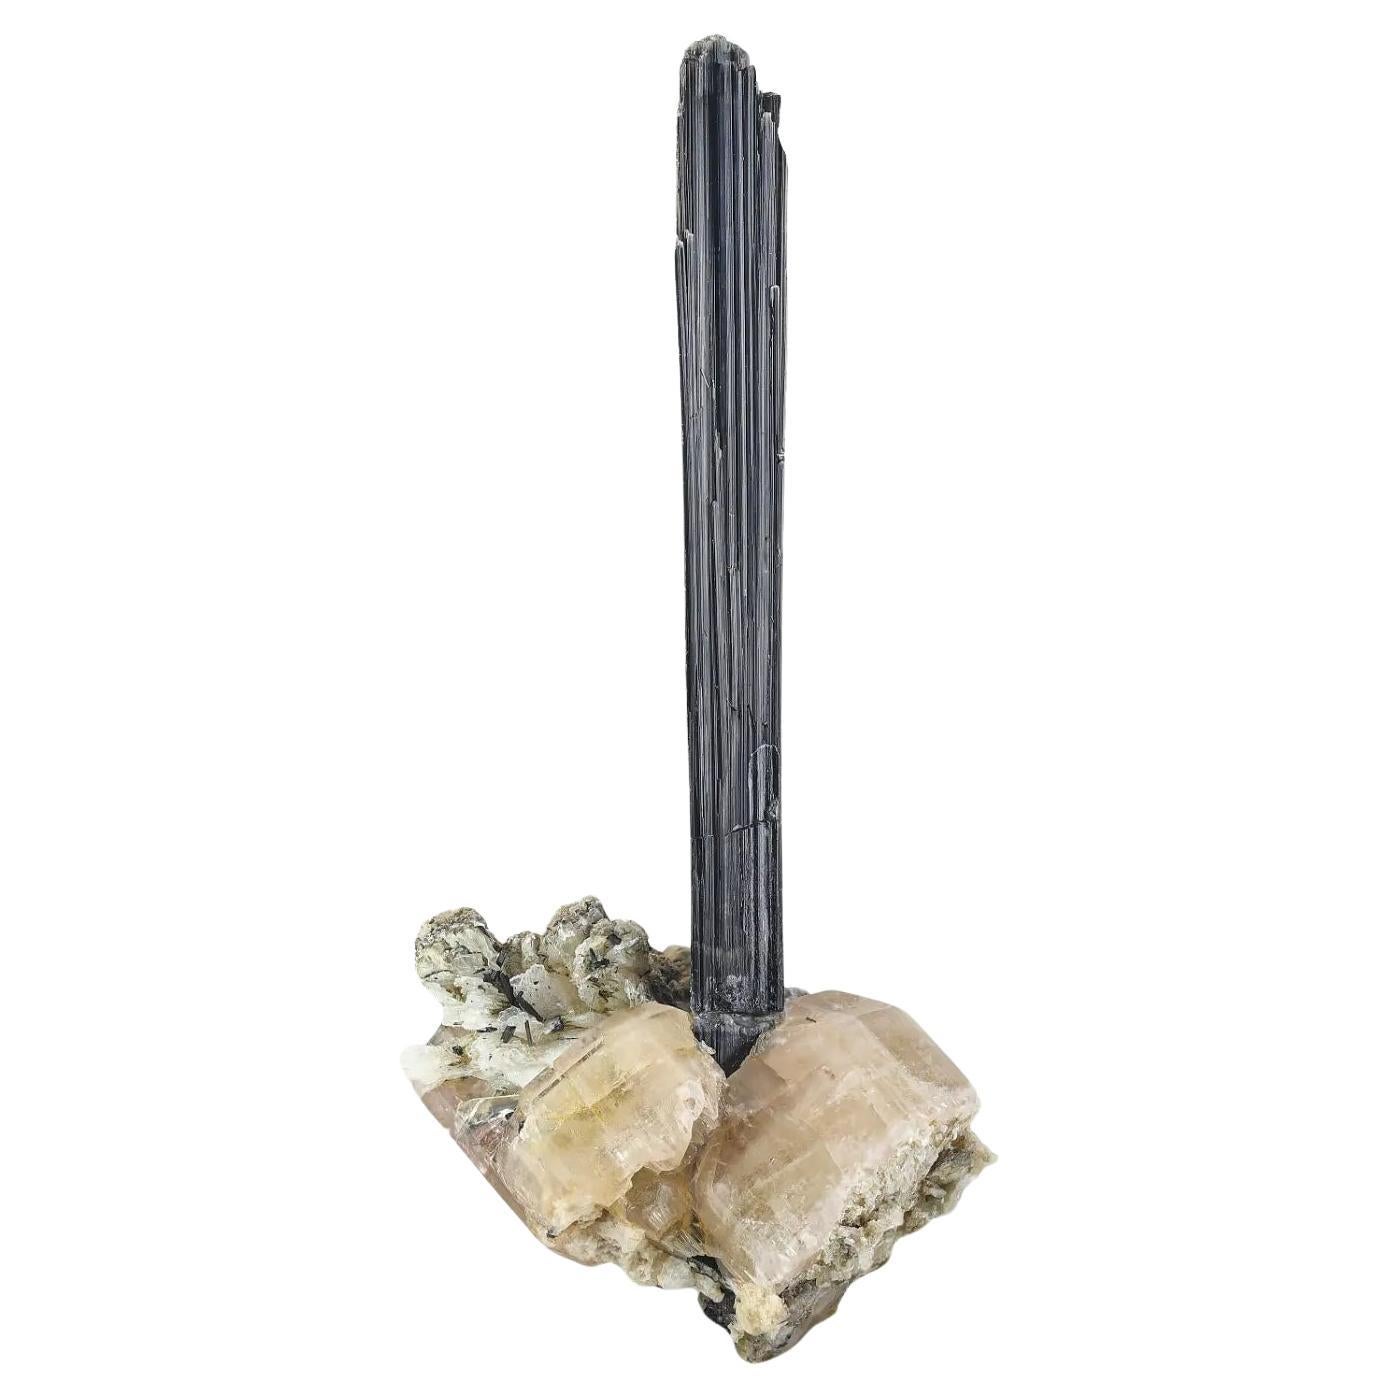 Elongated Free Standing Schorl Black Tourmaline Crystal on Apatite from Pakistan